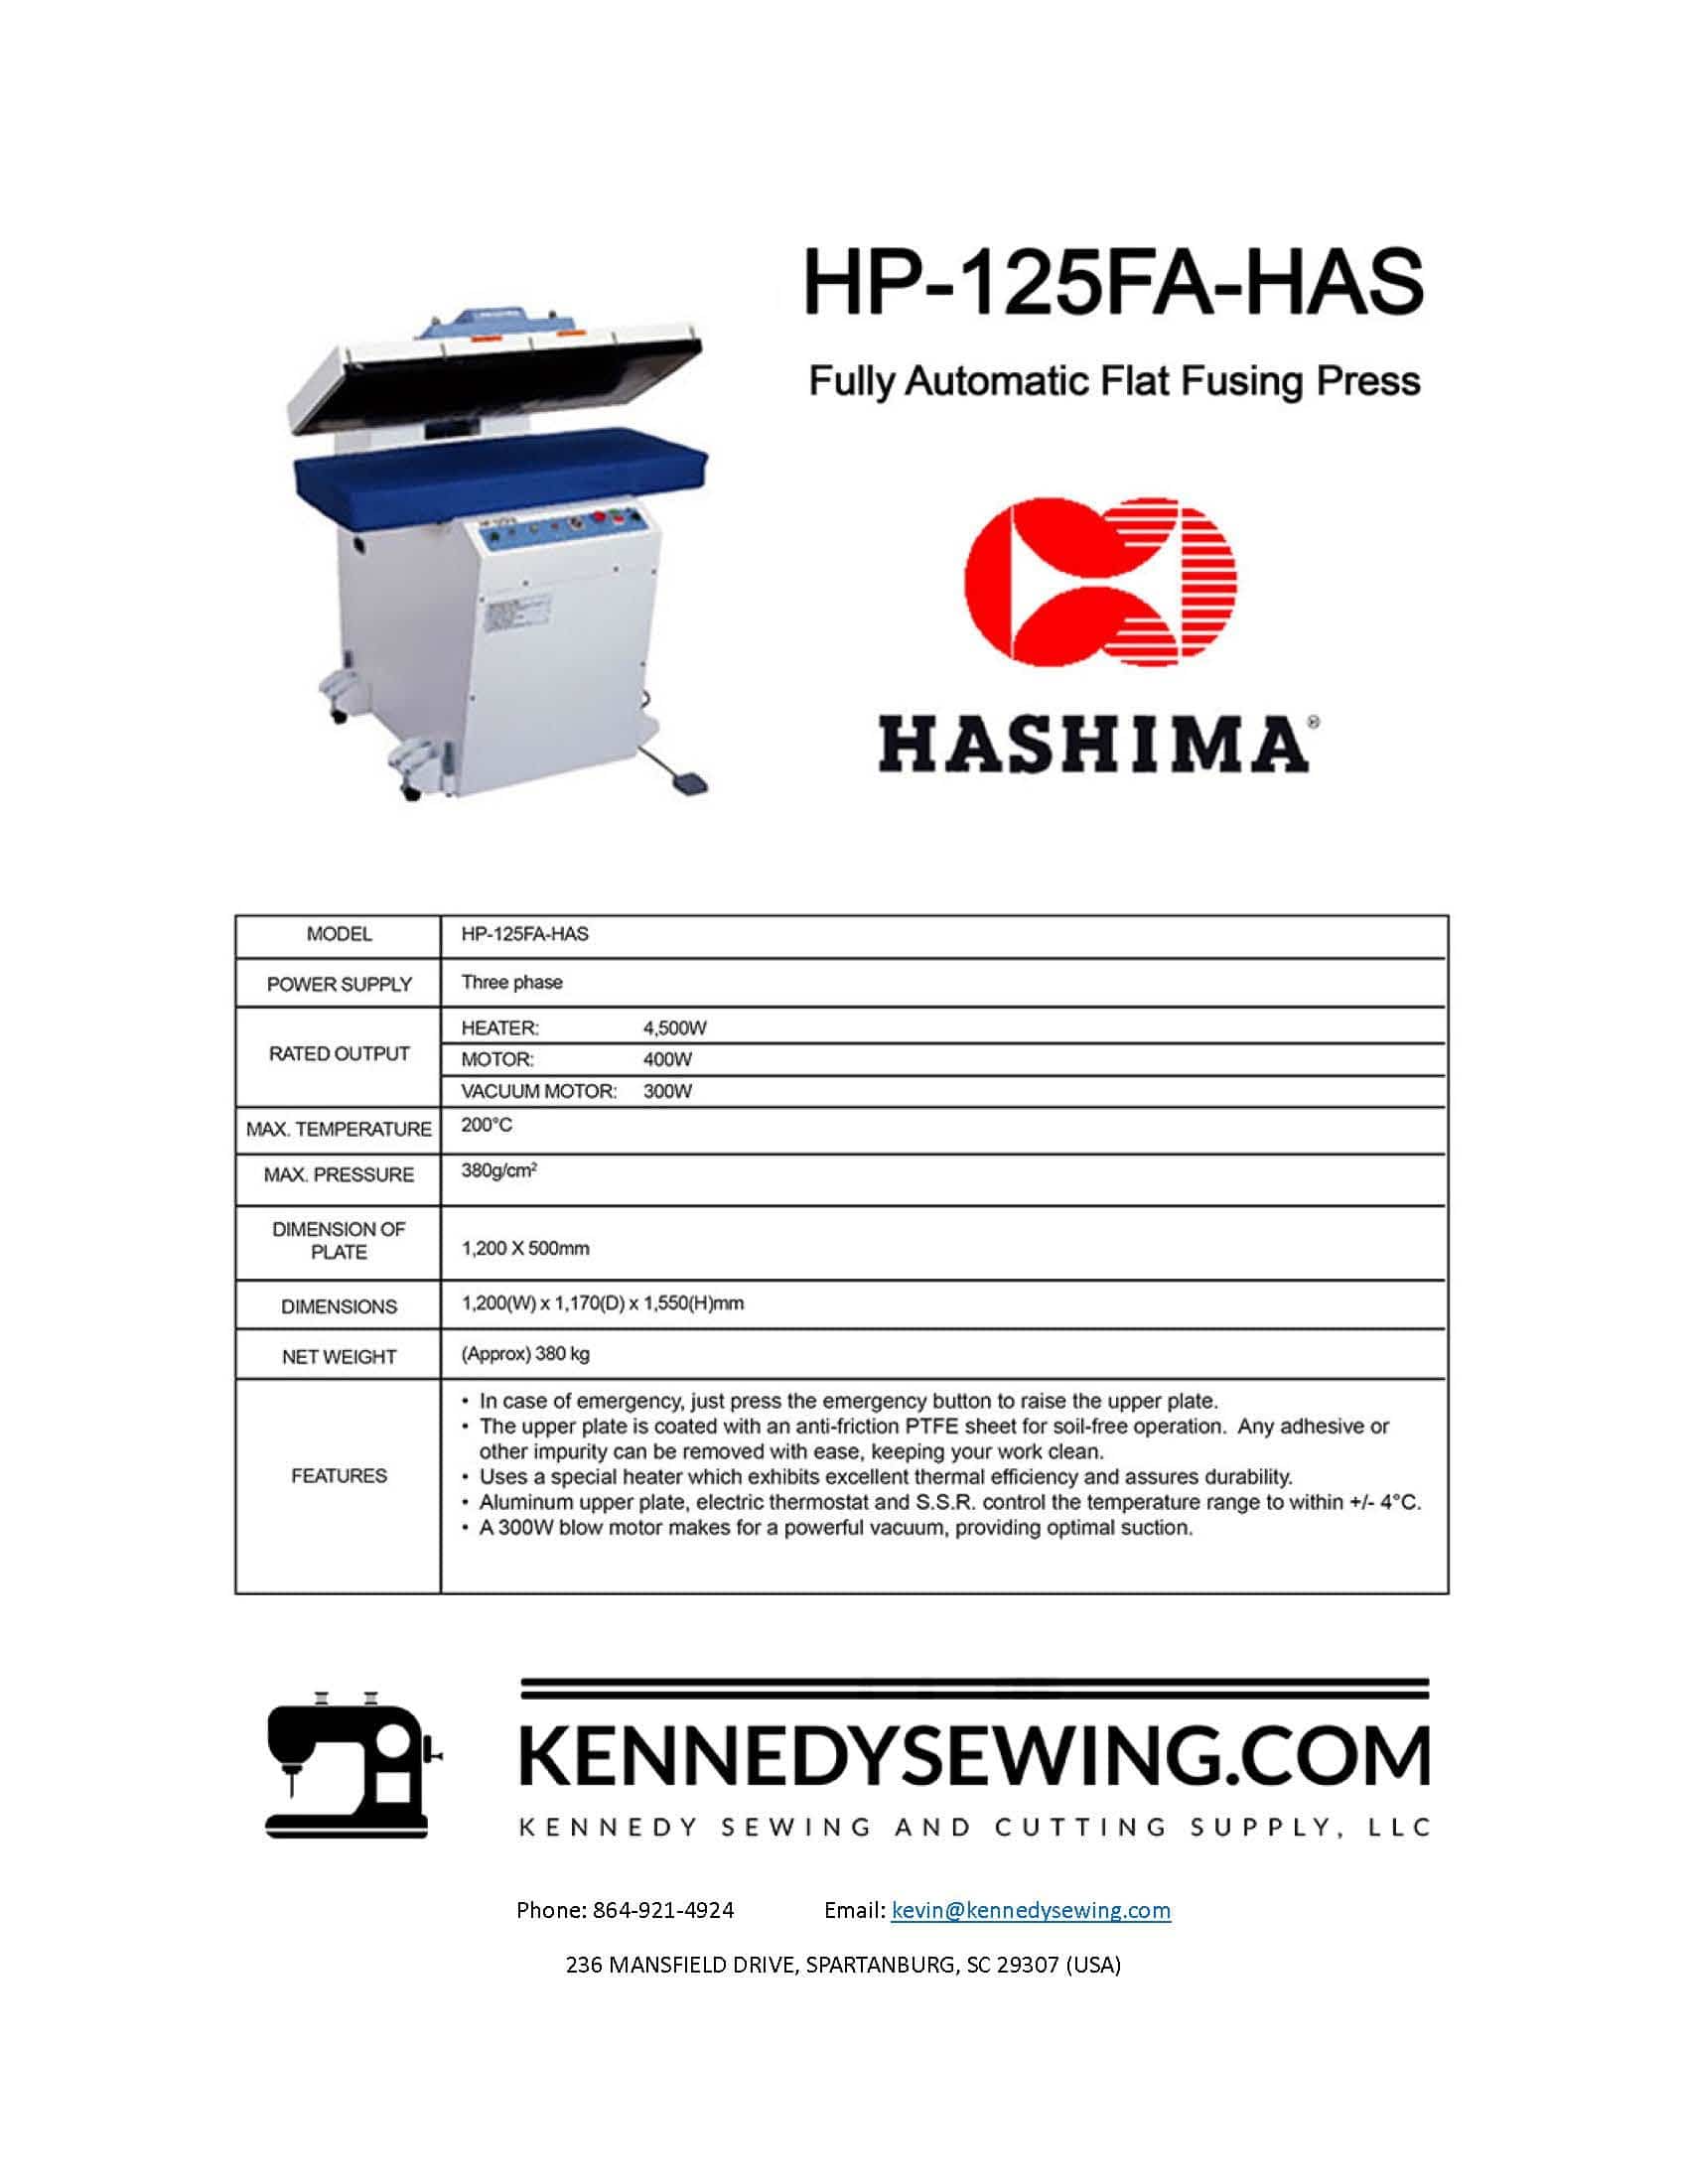 HASHIMA HP-125FA-HAS FULLY AUTOMATIC FLAT FUSING PRESS